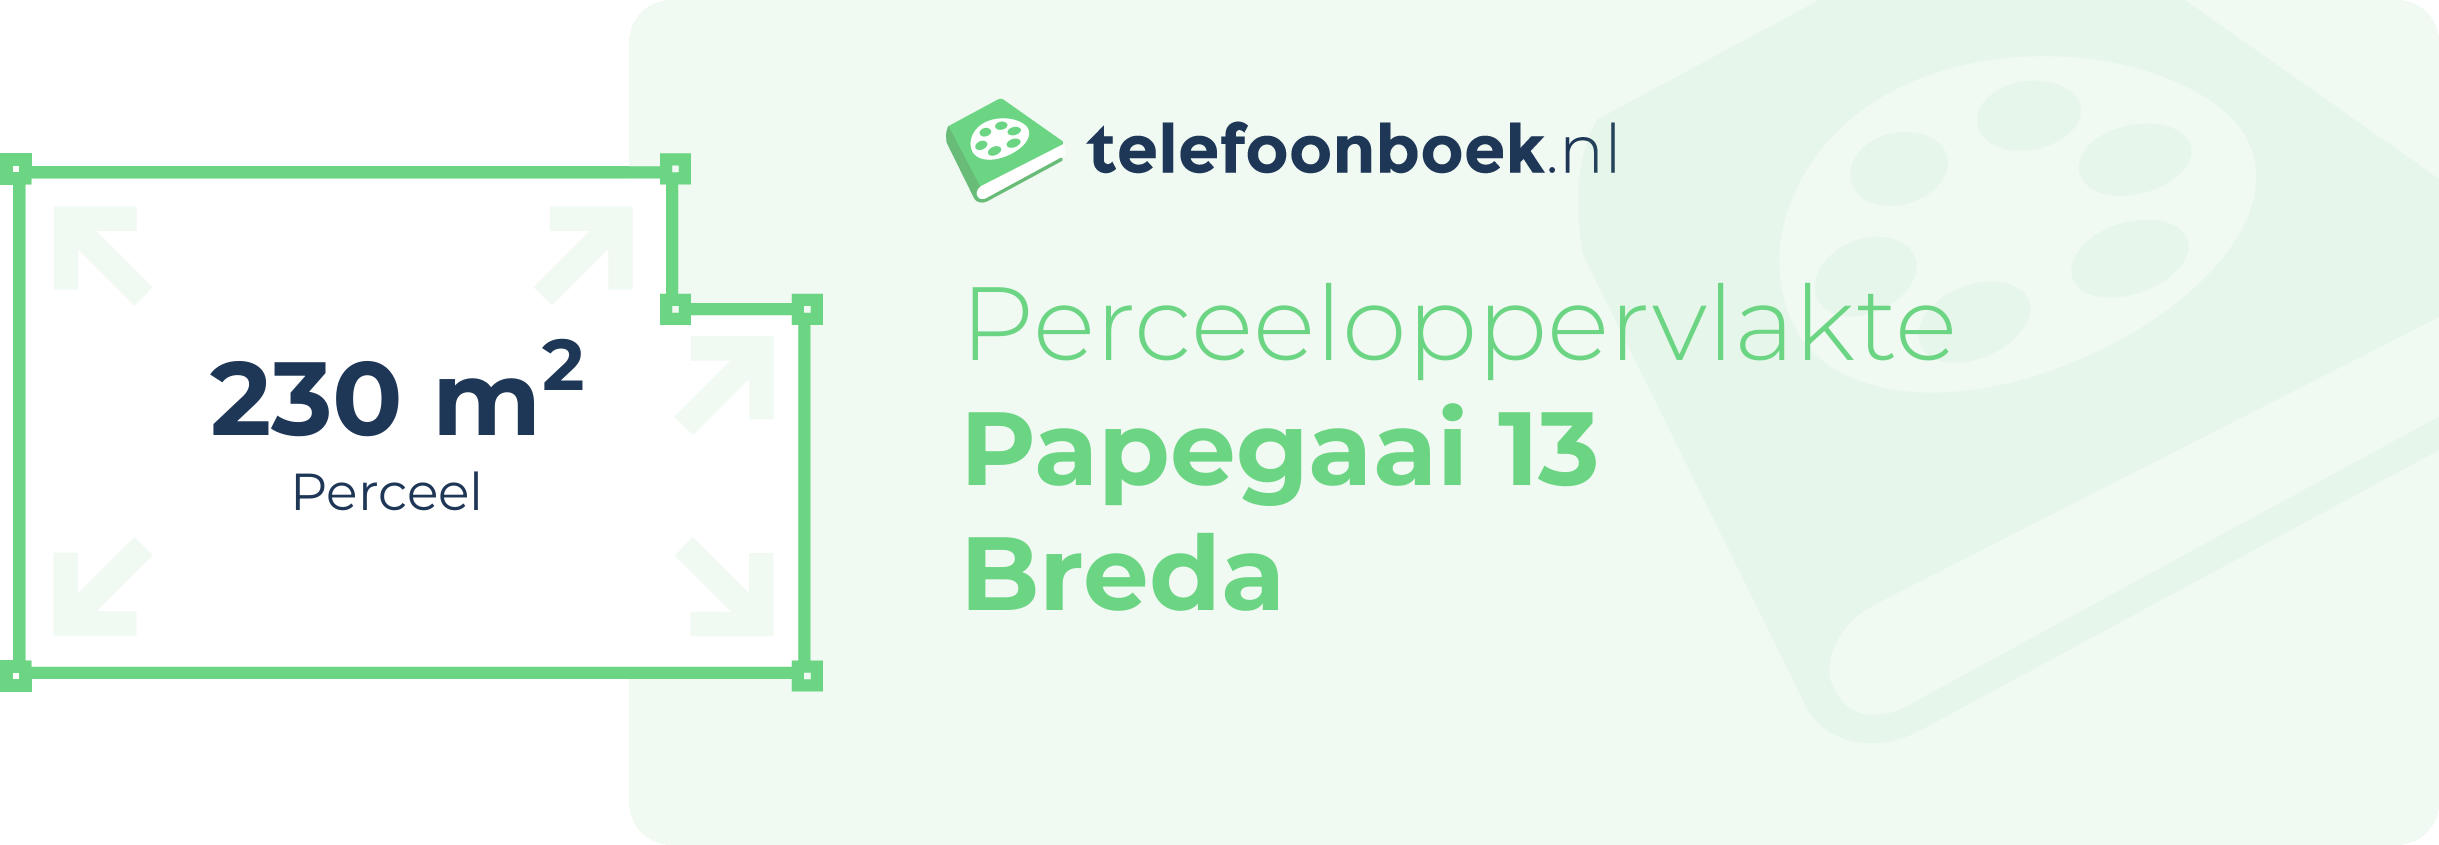 Perceeloppervlakte Papegaai 13 Breda